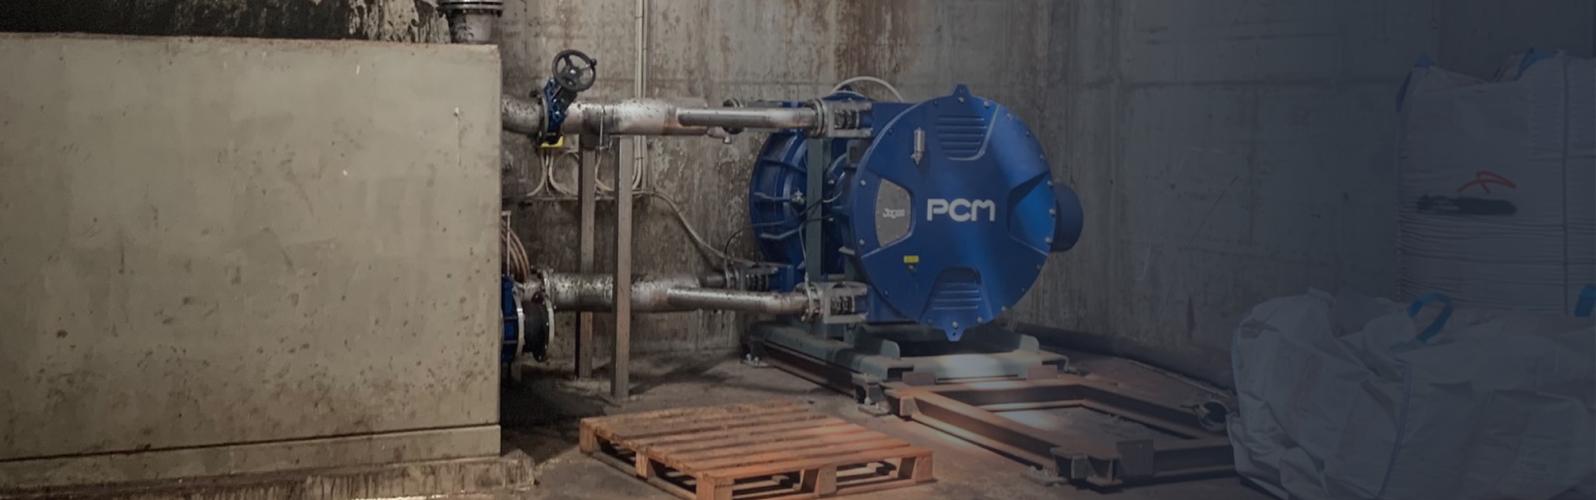 PCM DELASCO™ peristaltic pumping solutions